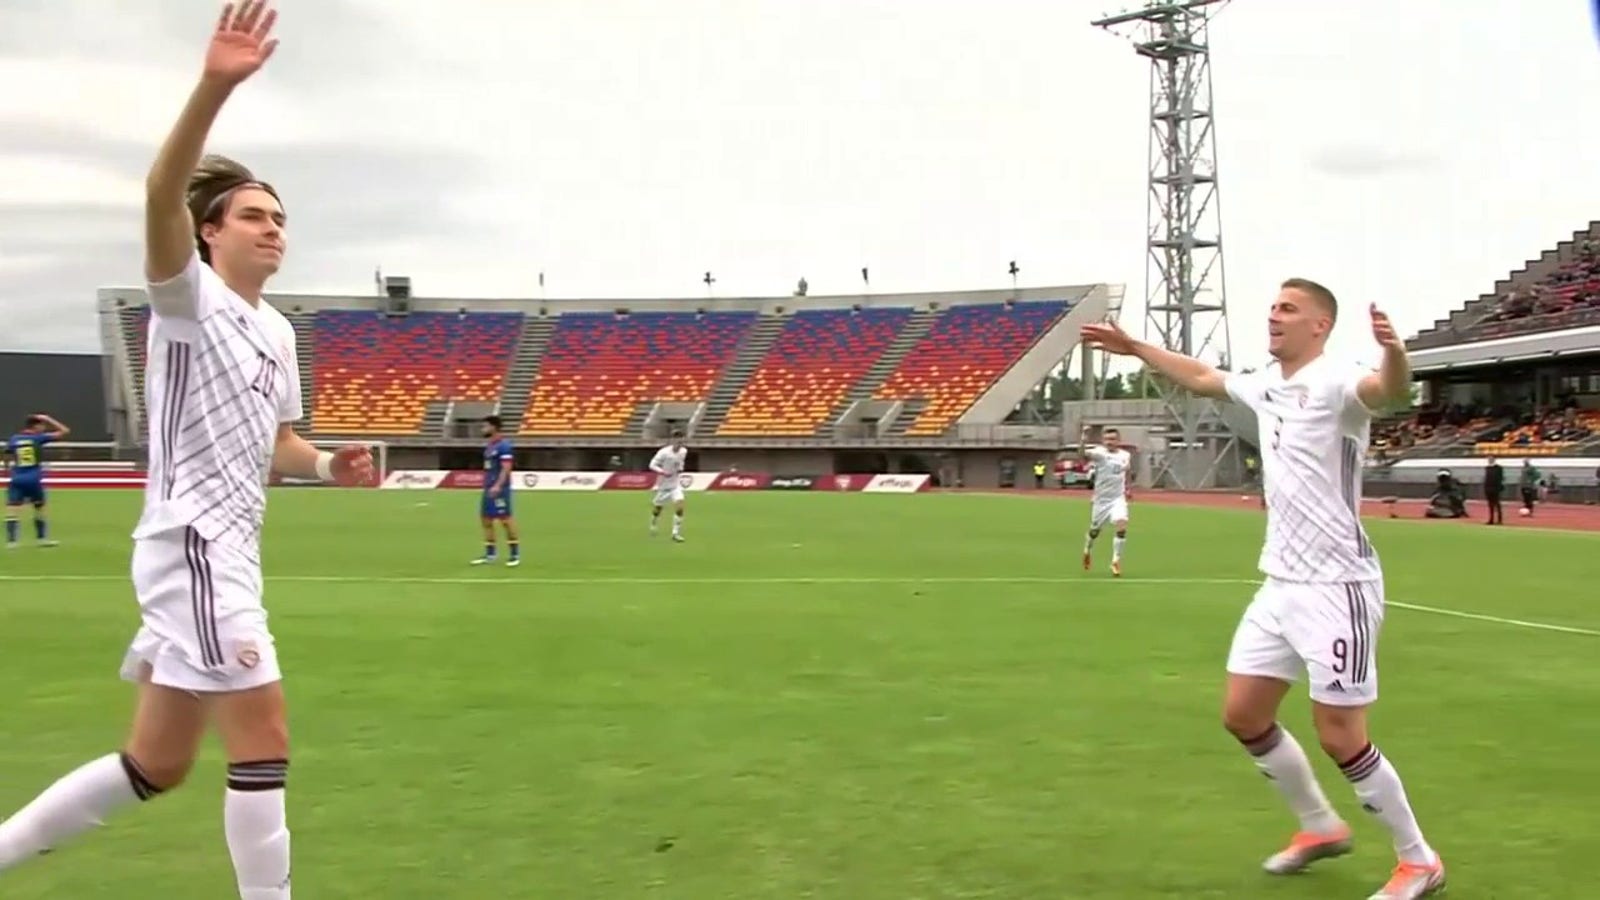 Latvia's beautiful set piece fuels Roberts Uldriķis' first goal vs. Andorra